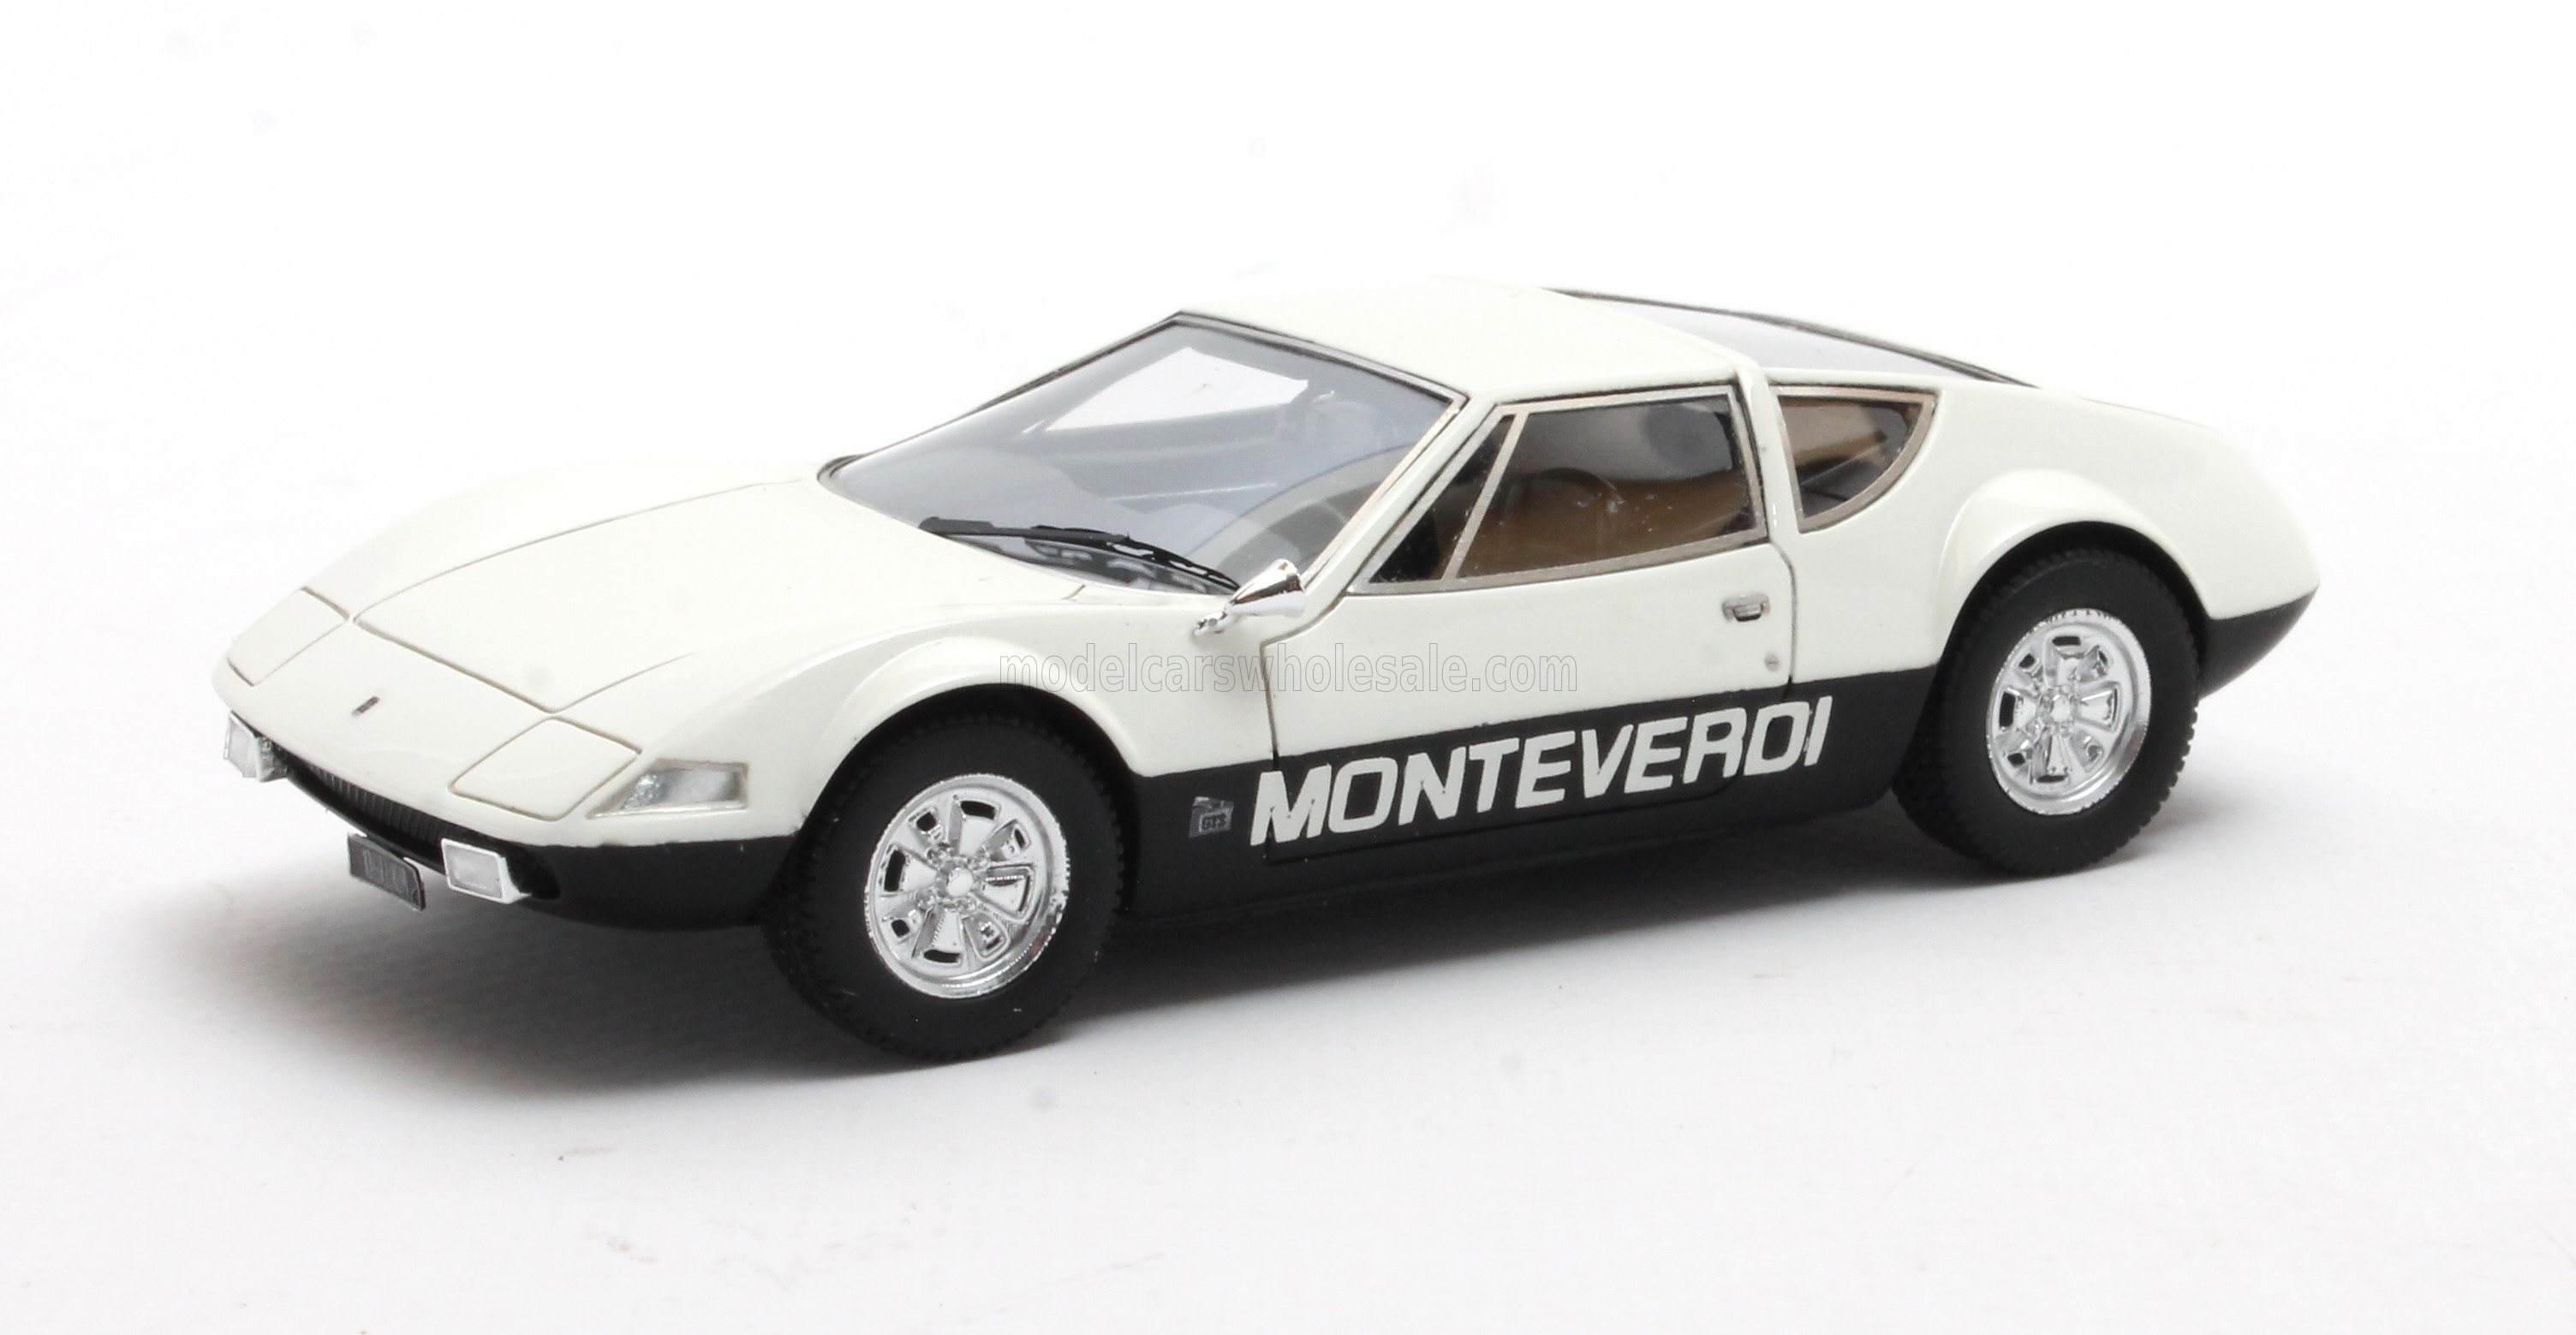 MONTEVERDI - HAI 450 GTS 1973 - zwart wit